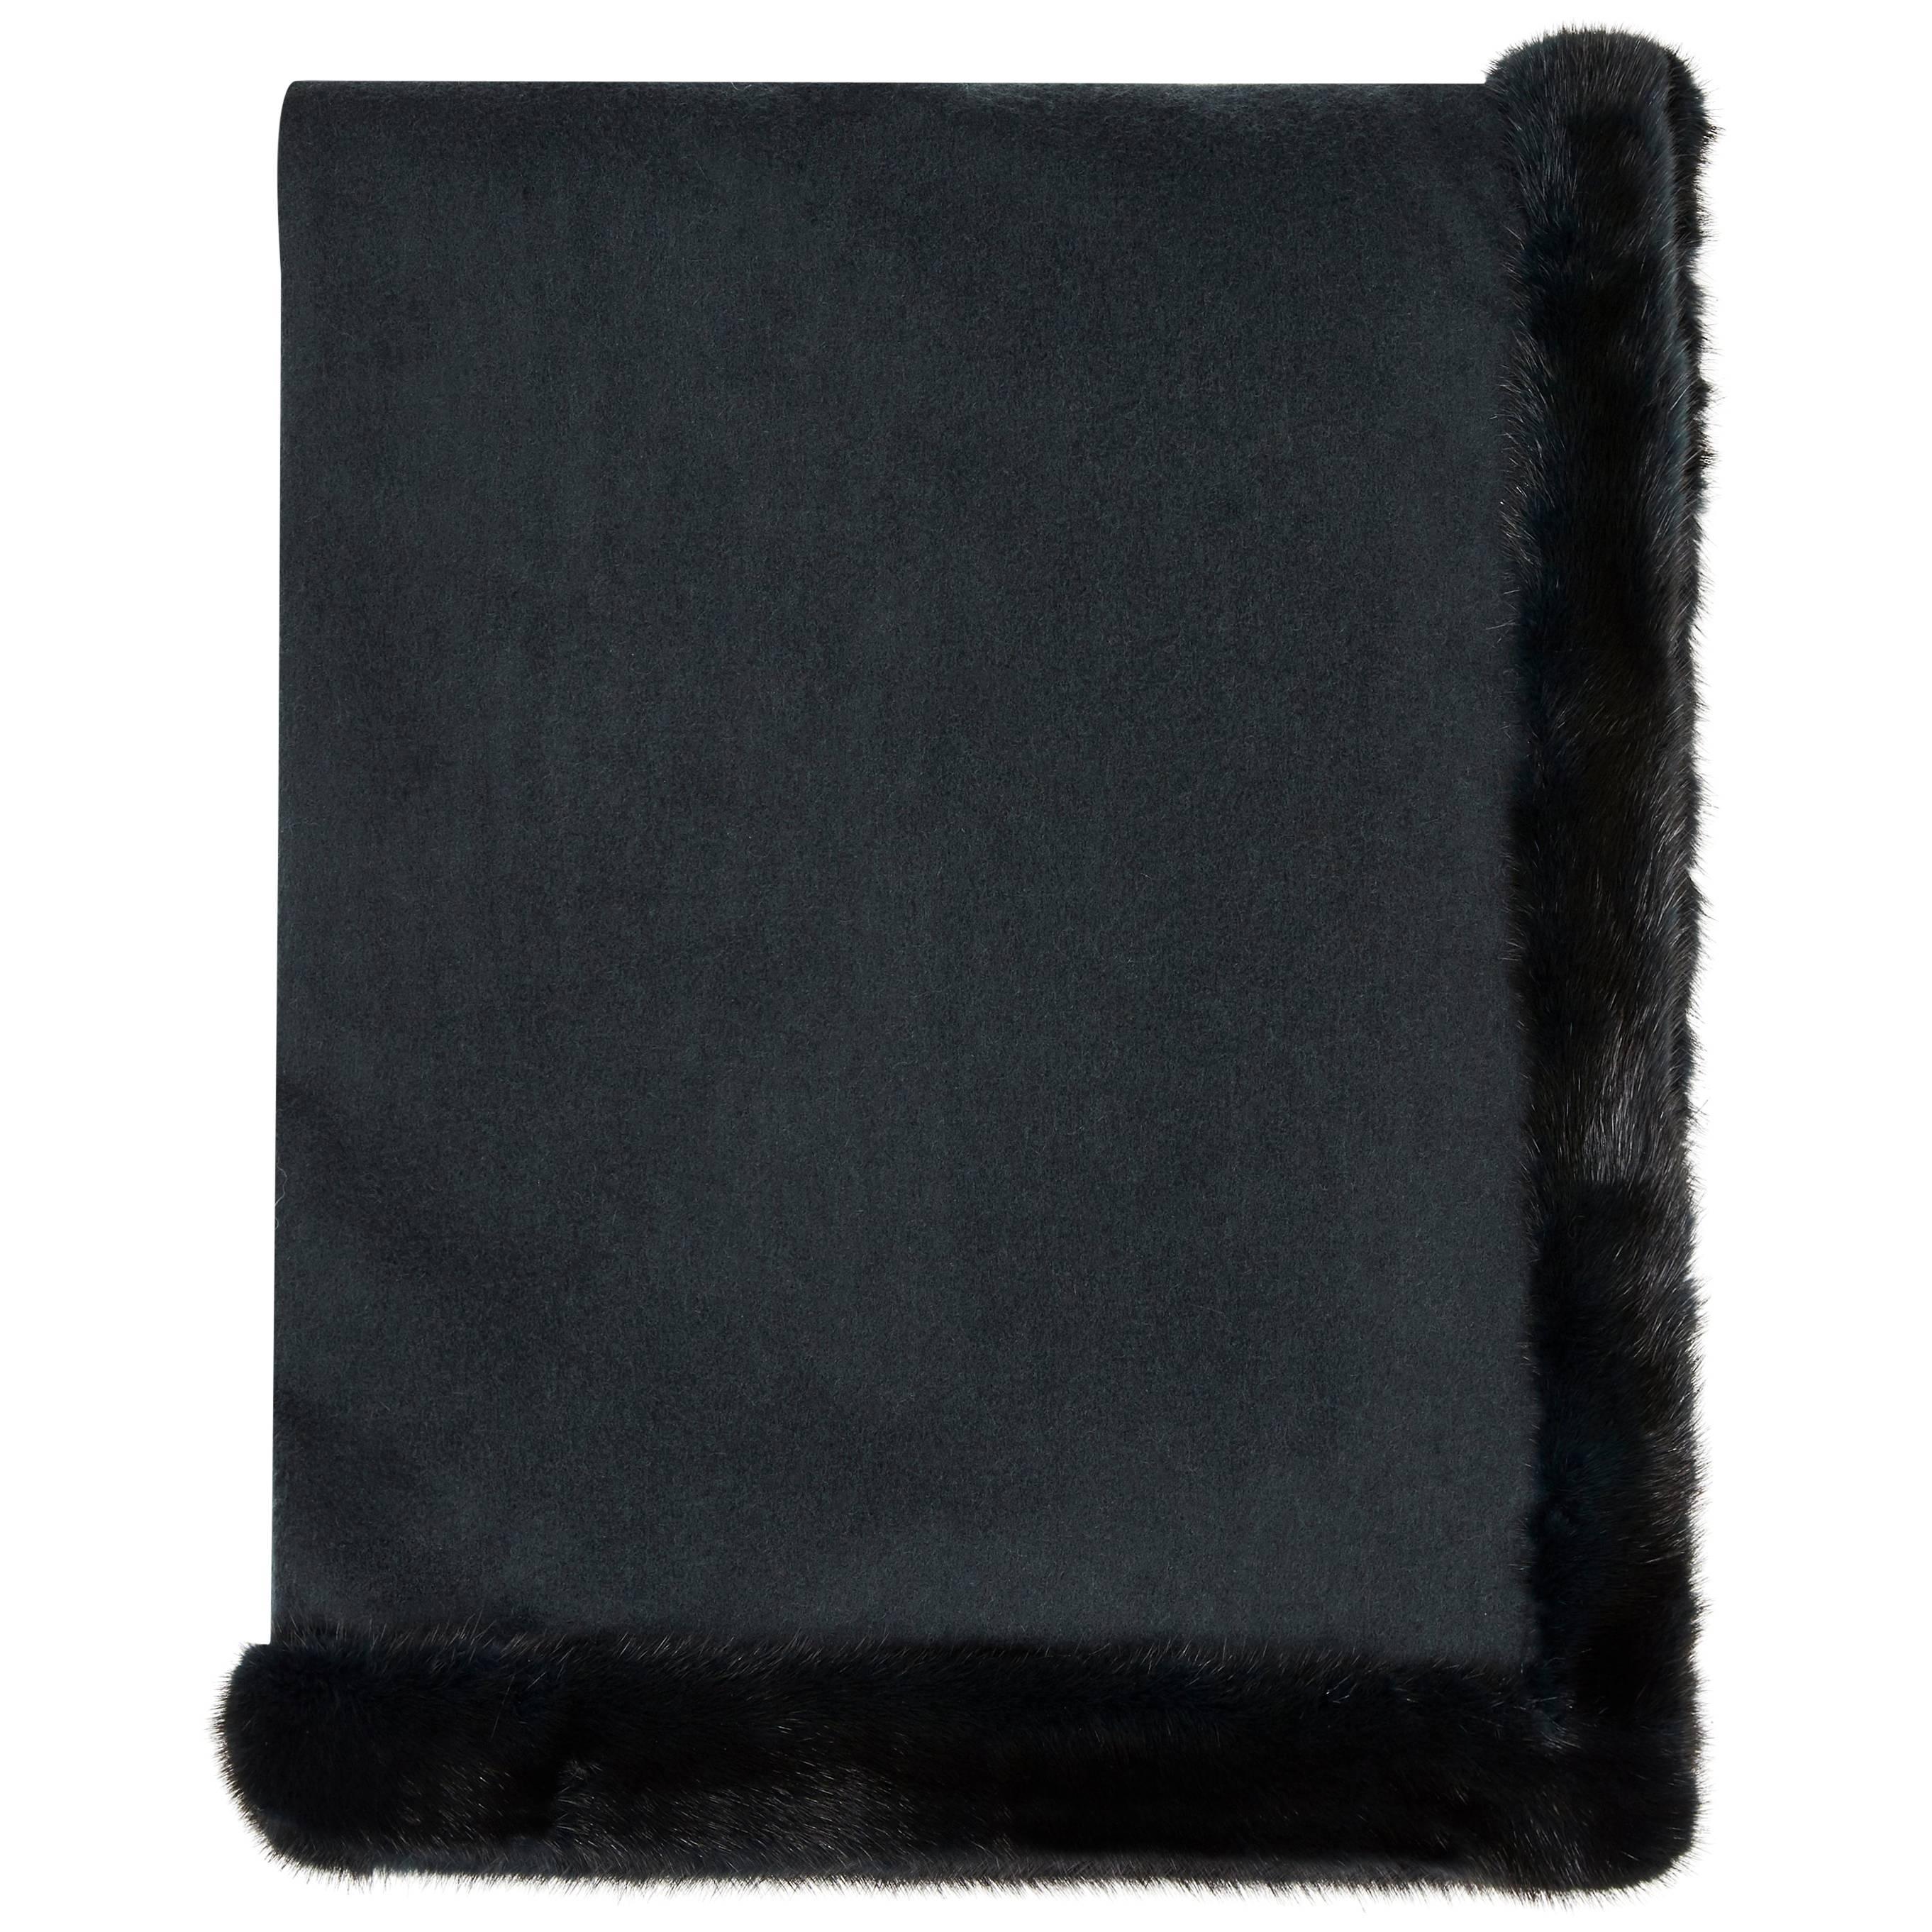 Verheyen London Limited Edition Cashmere Mink Fur Trimmed Black Teal Shawl 